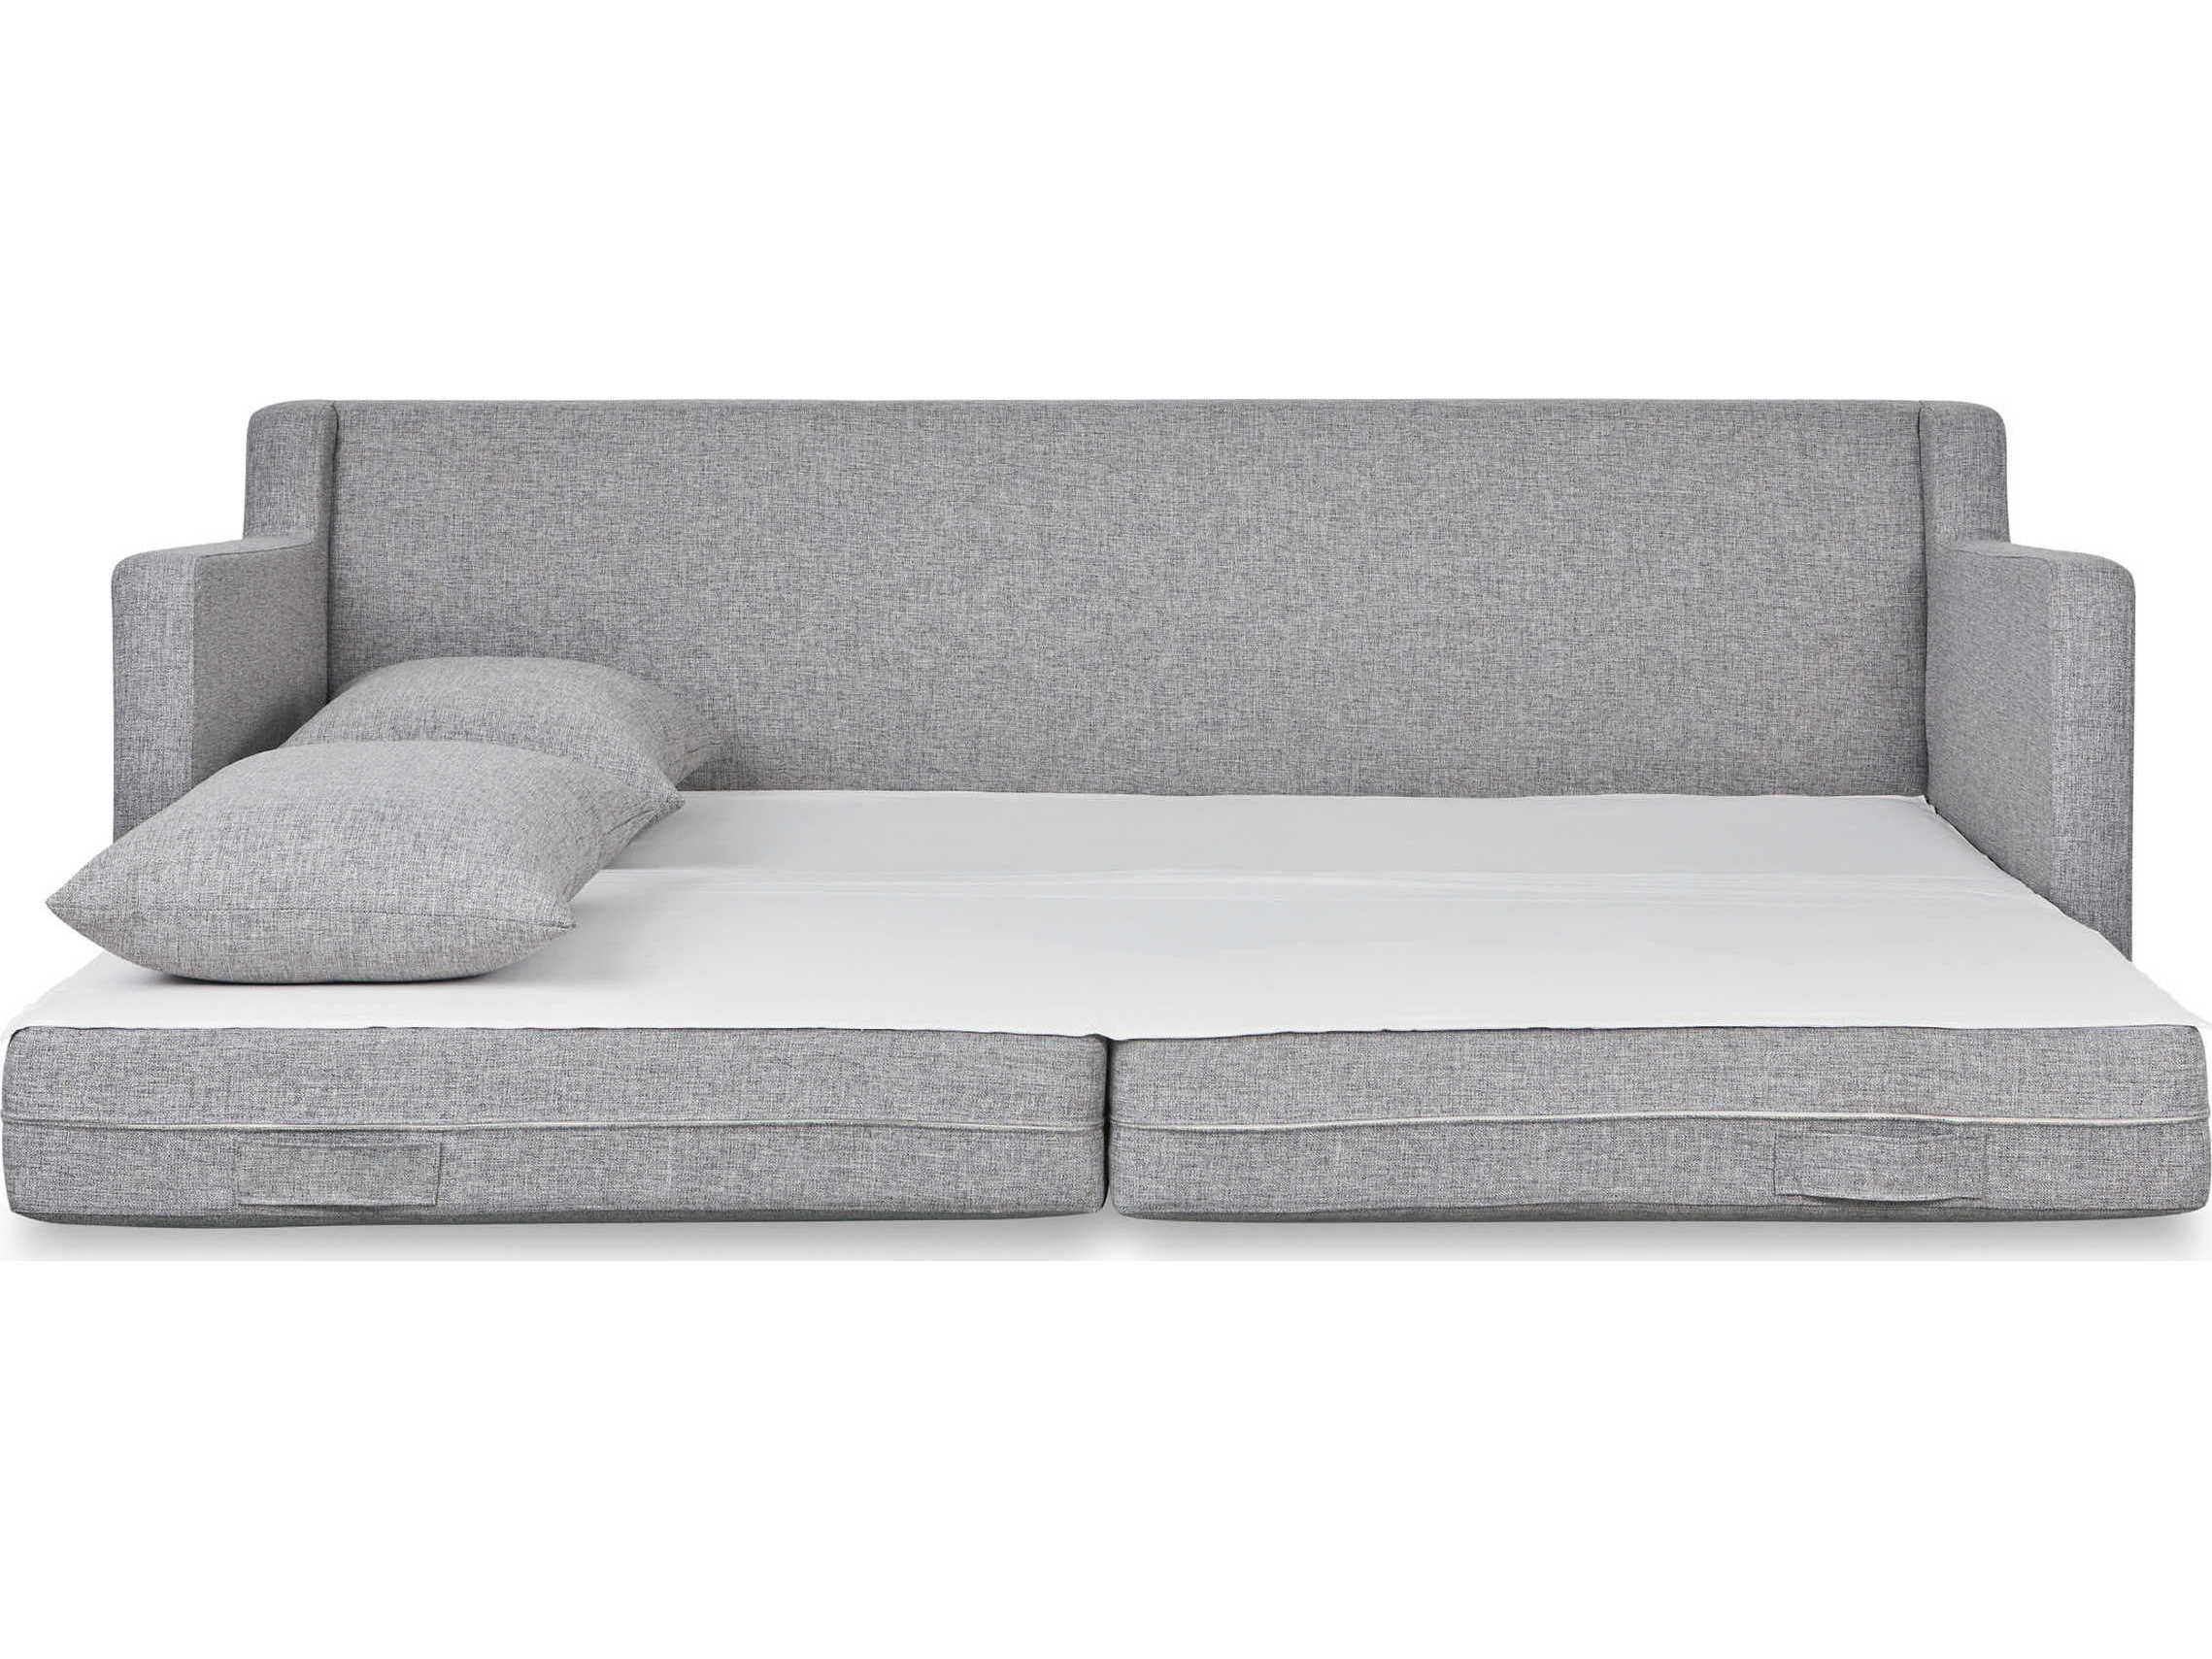 gus flipside sofa bed reviews